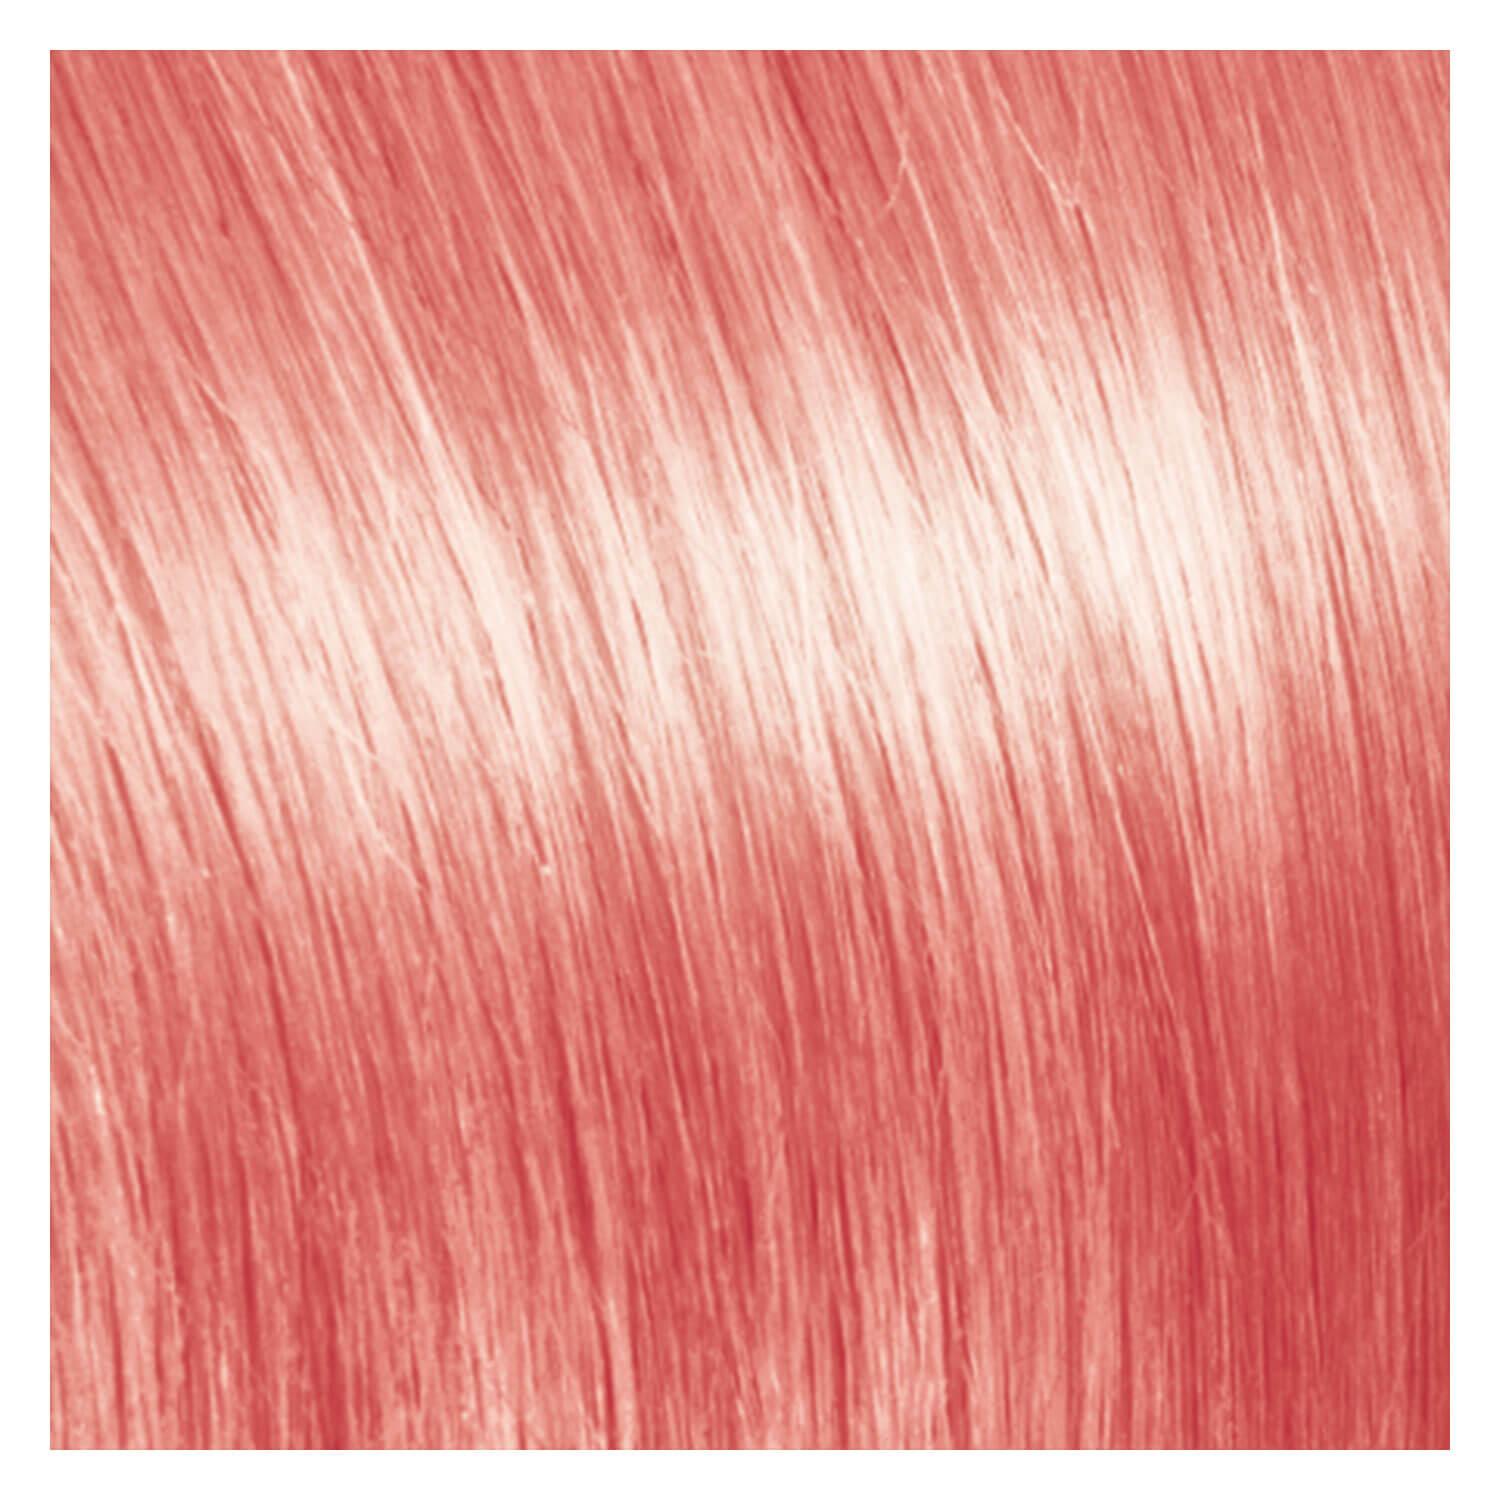 SHE Bonding-System Hair Extensions Fantasy Straight - Dark Pink 55/60cm